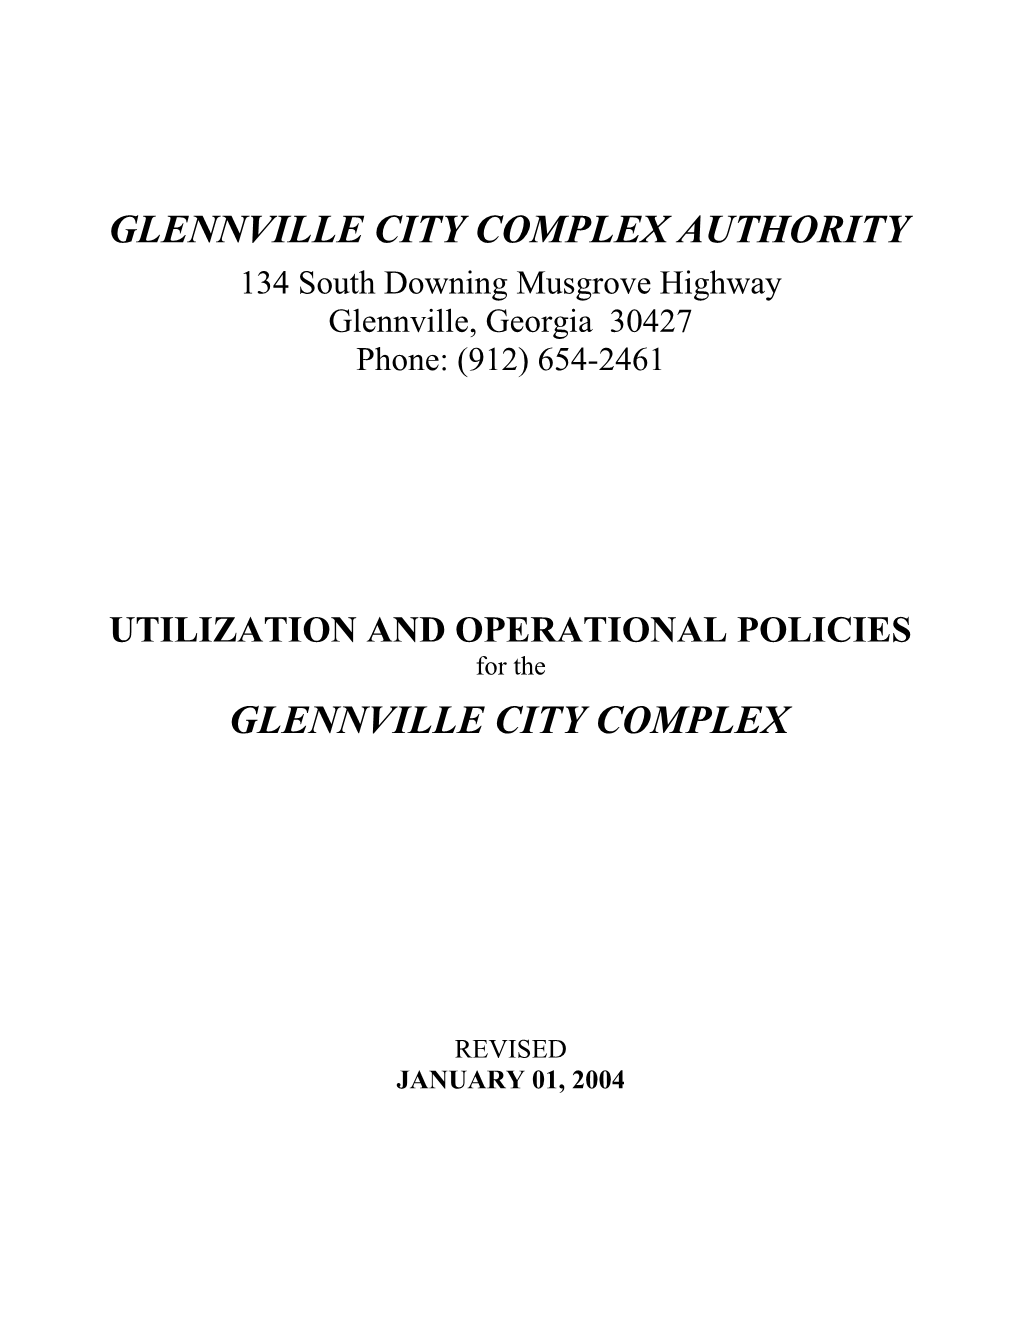 Glennville City Complex Authority